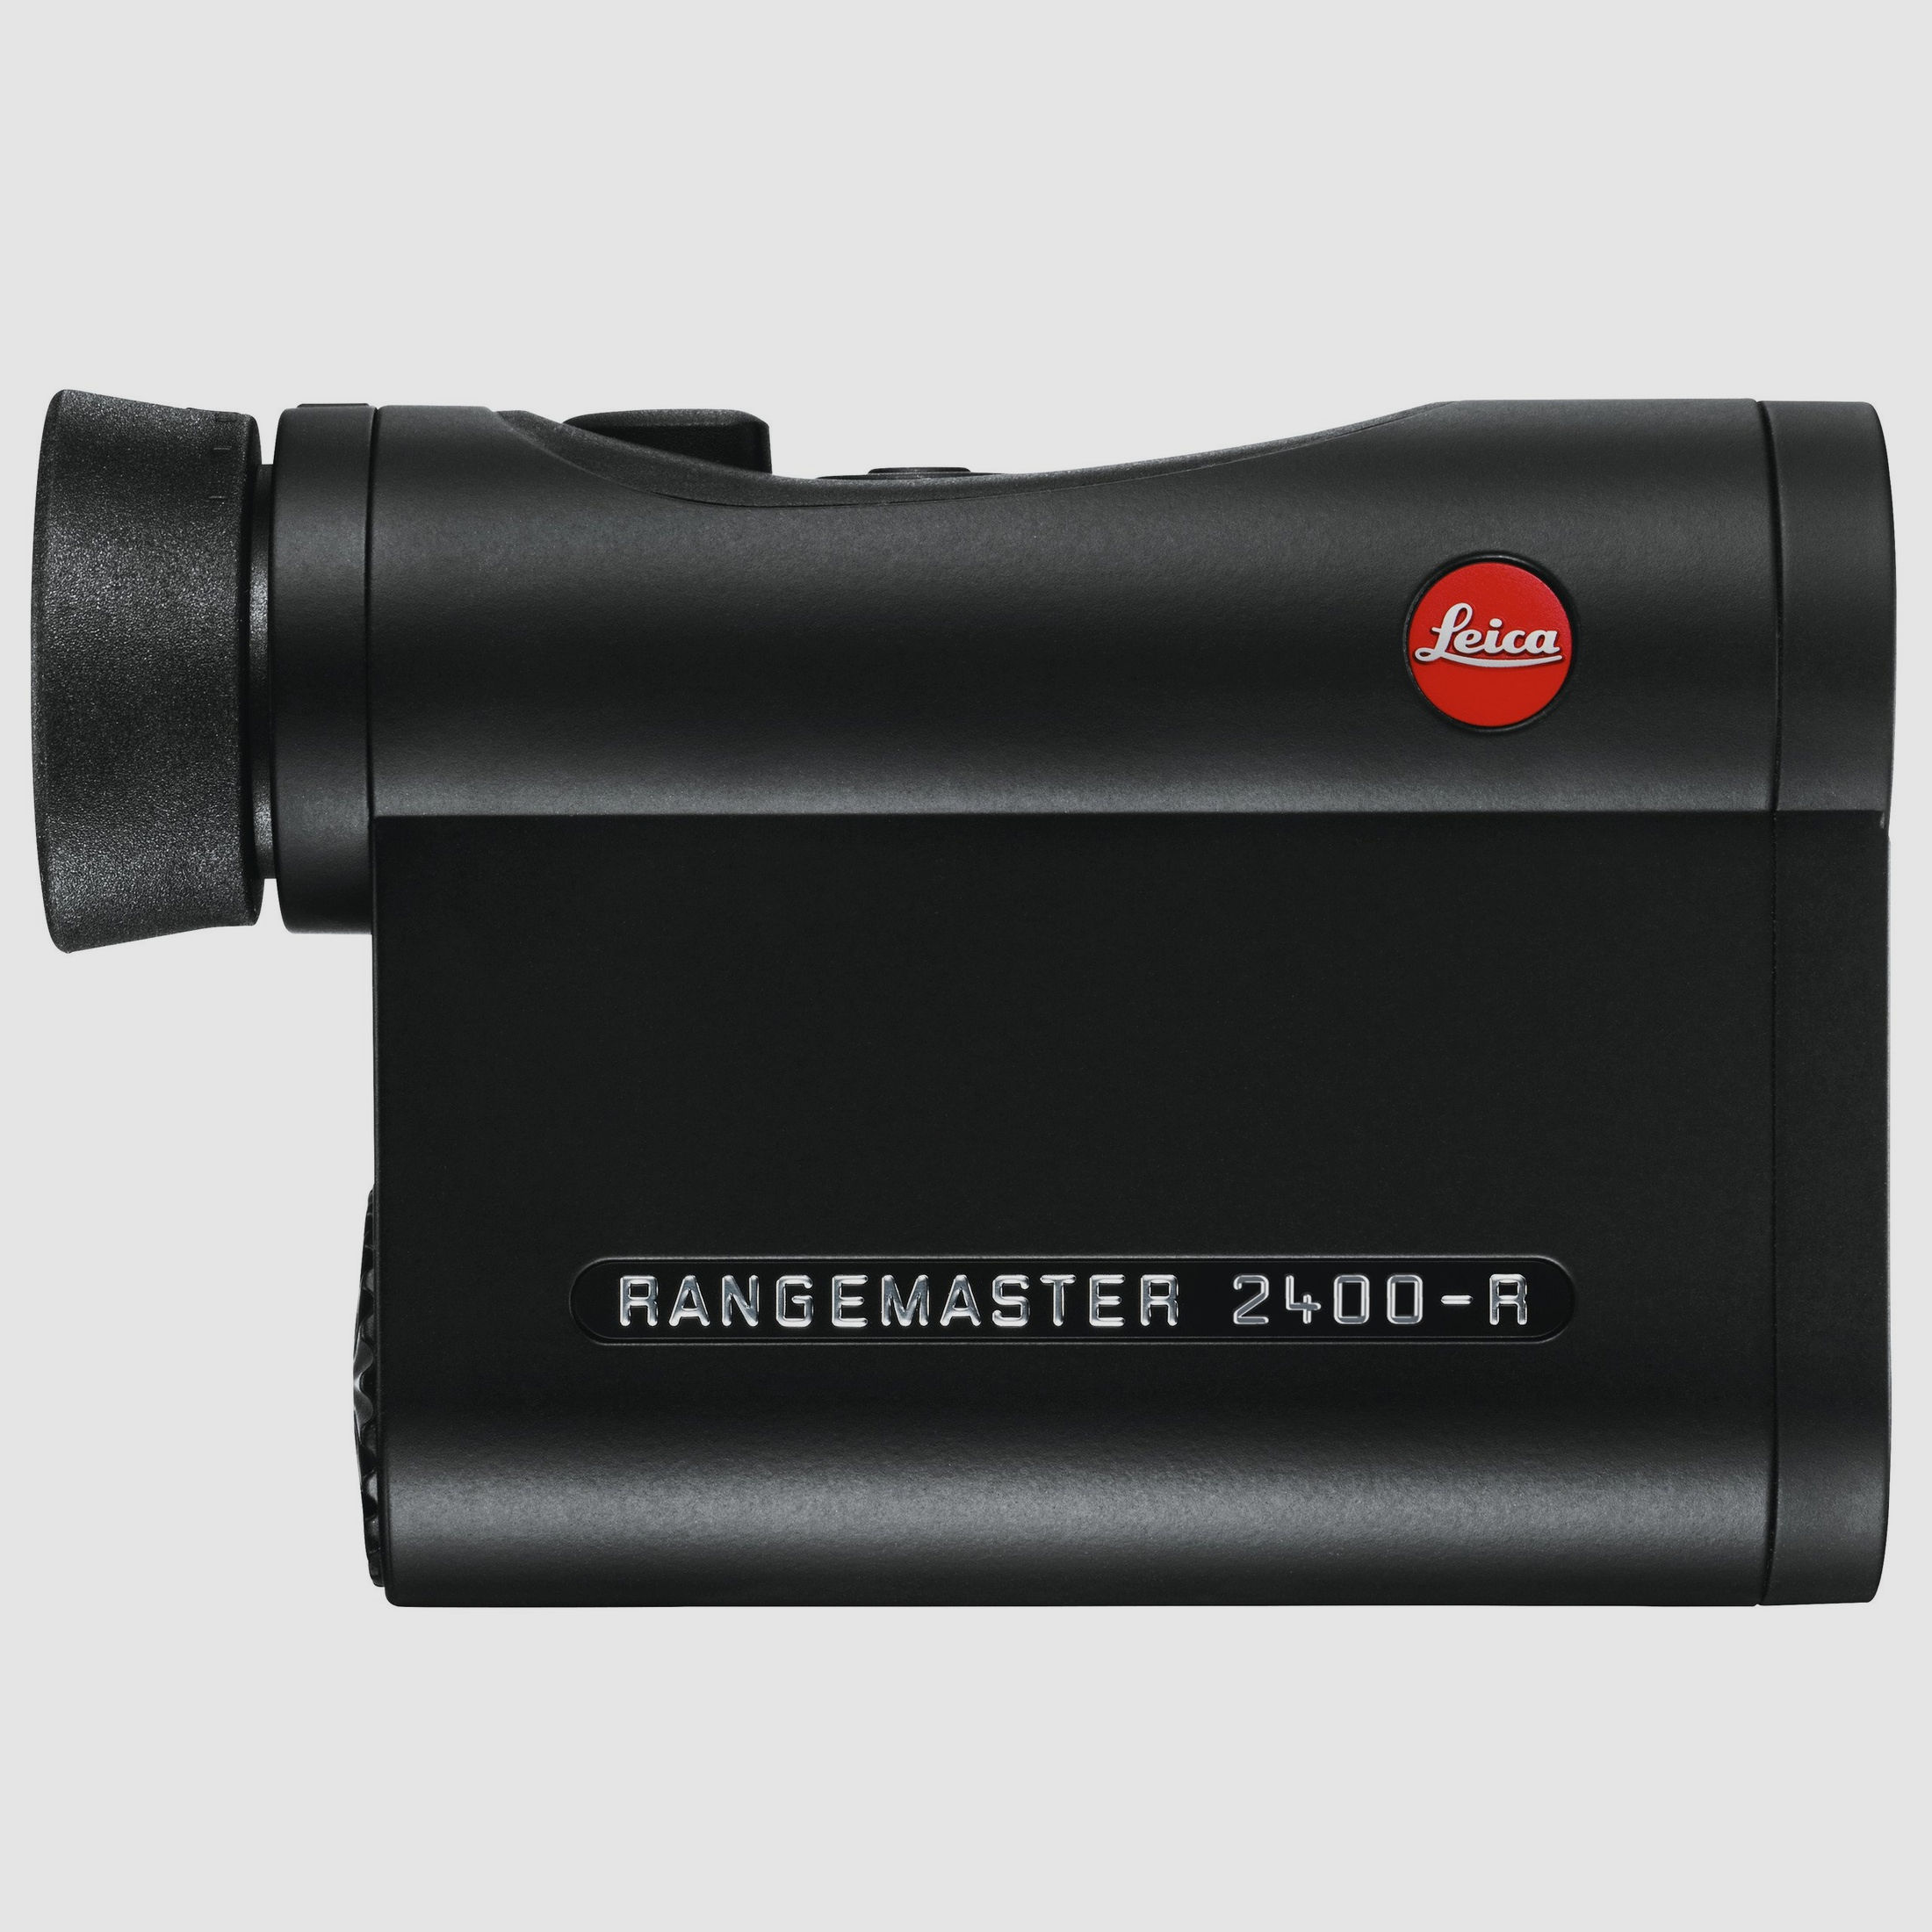 Leica Entfernungsmesser Rangemaster CRF 2400-R